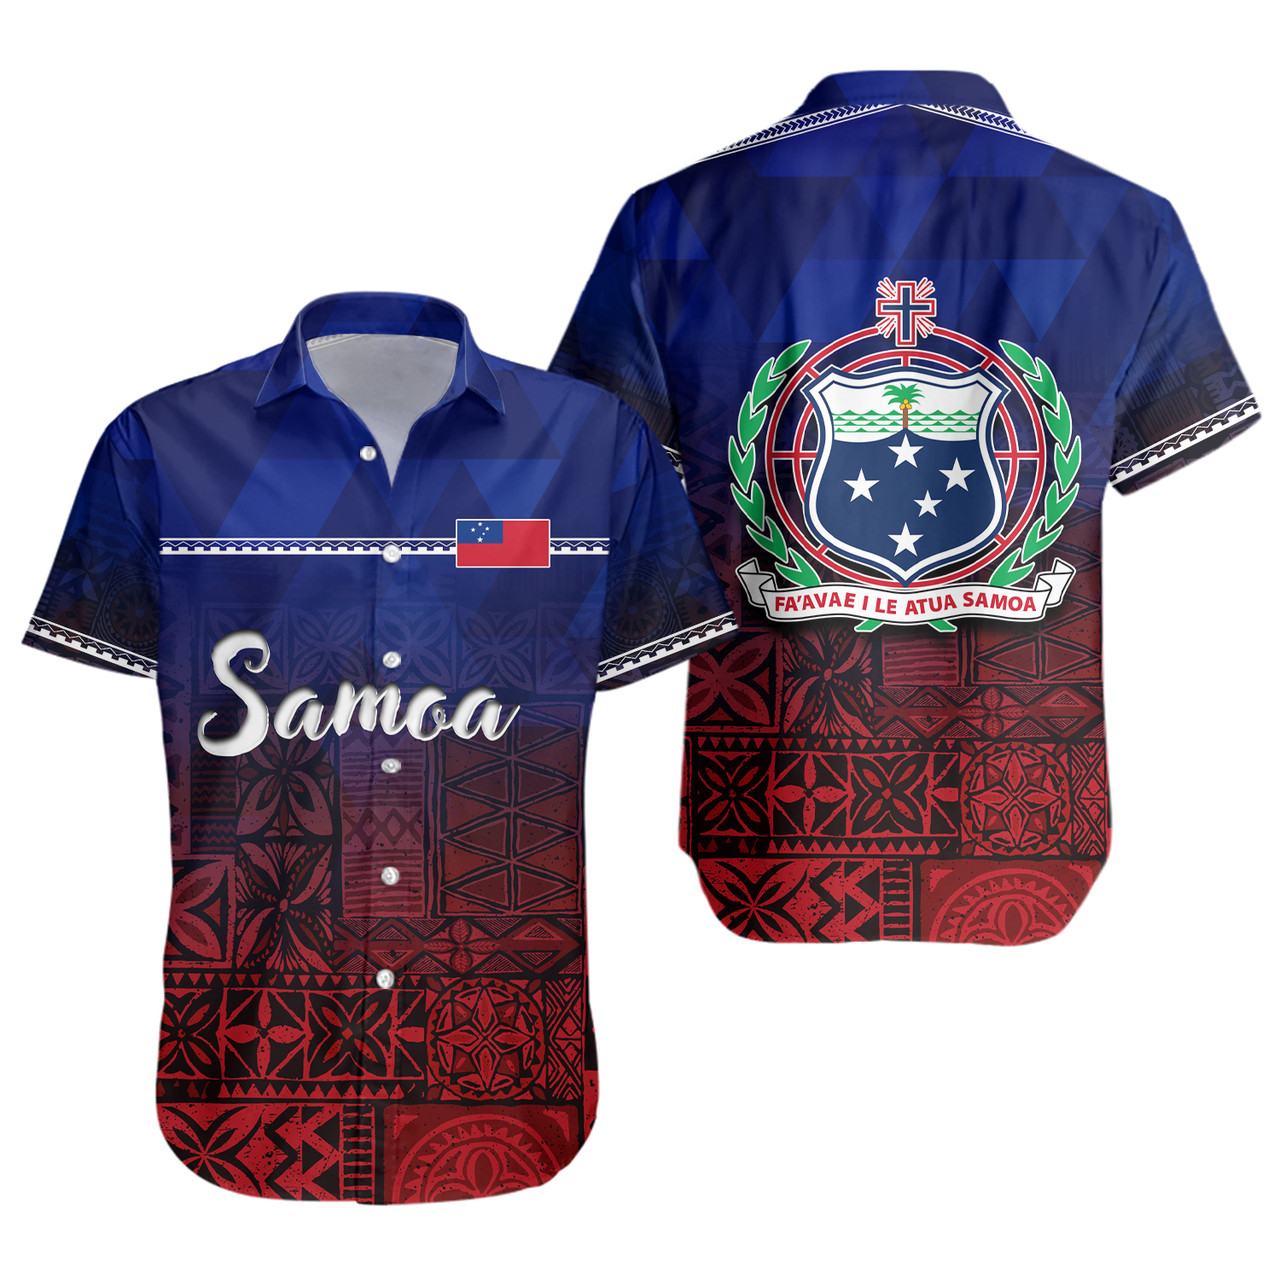 Samoa Short Sleeve Shirt Lowpolly Pattern with Polynesian Motif